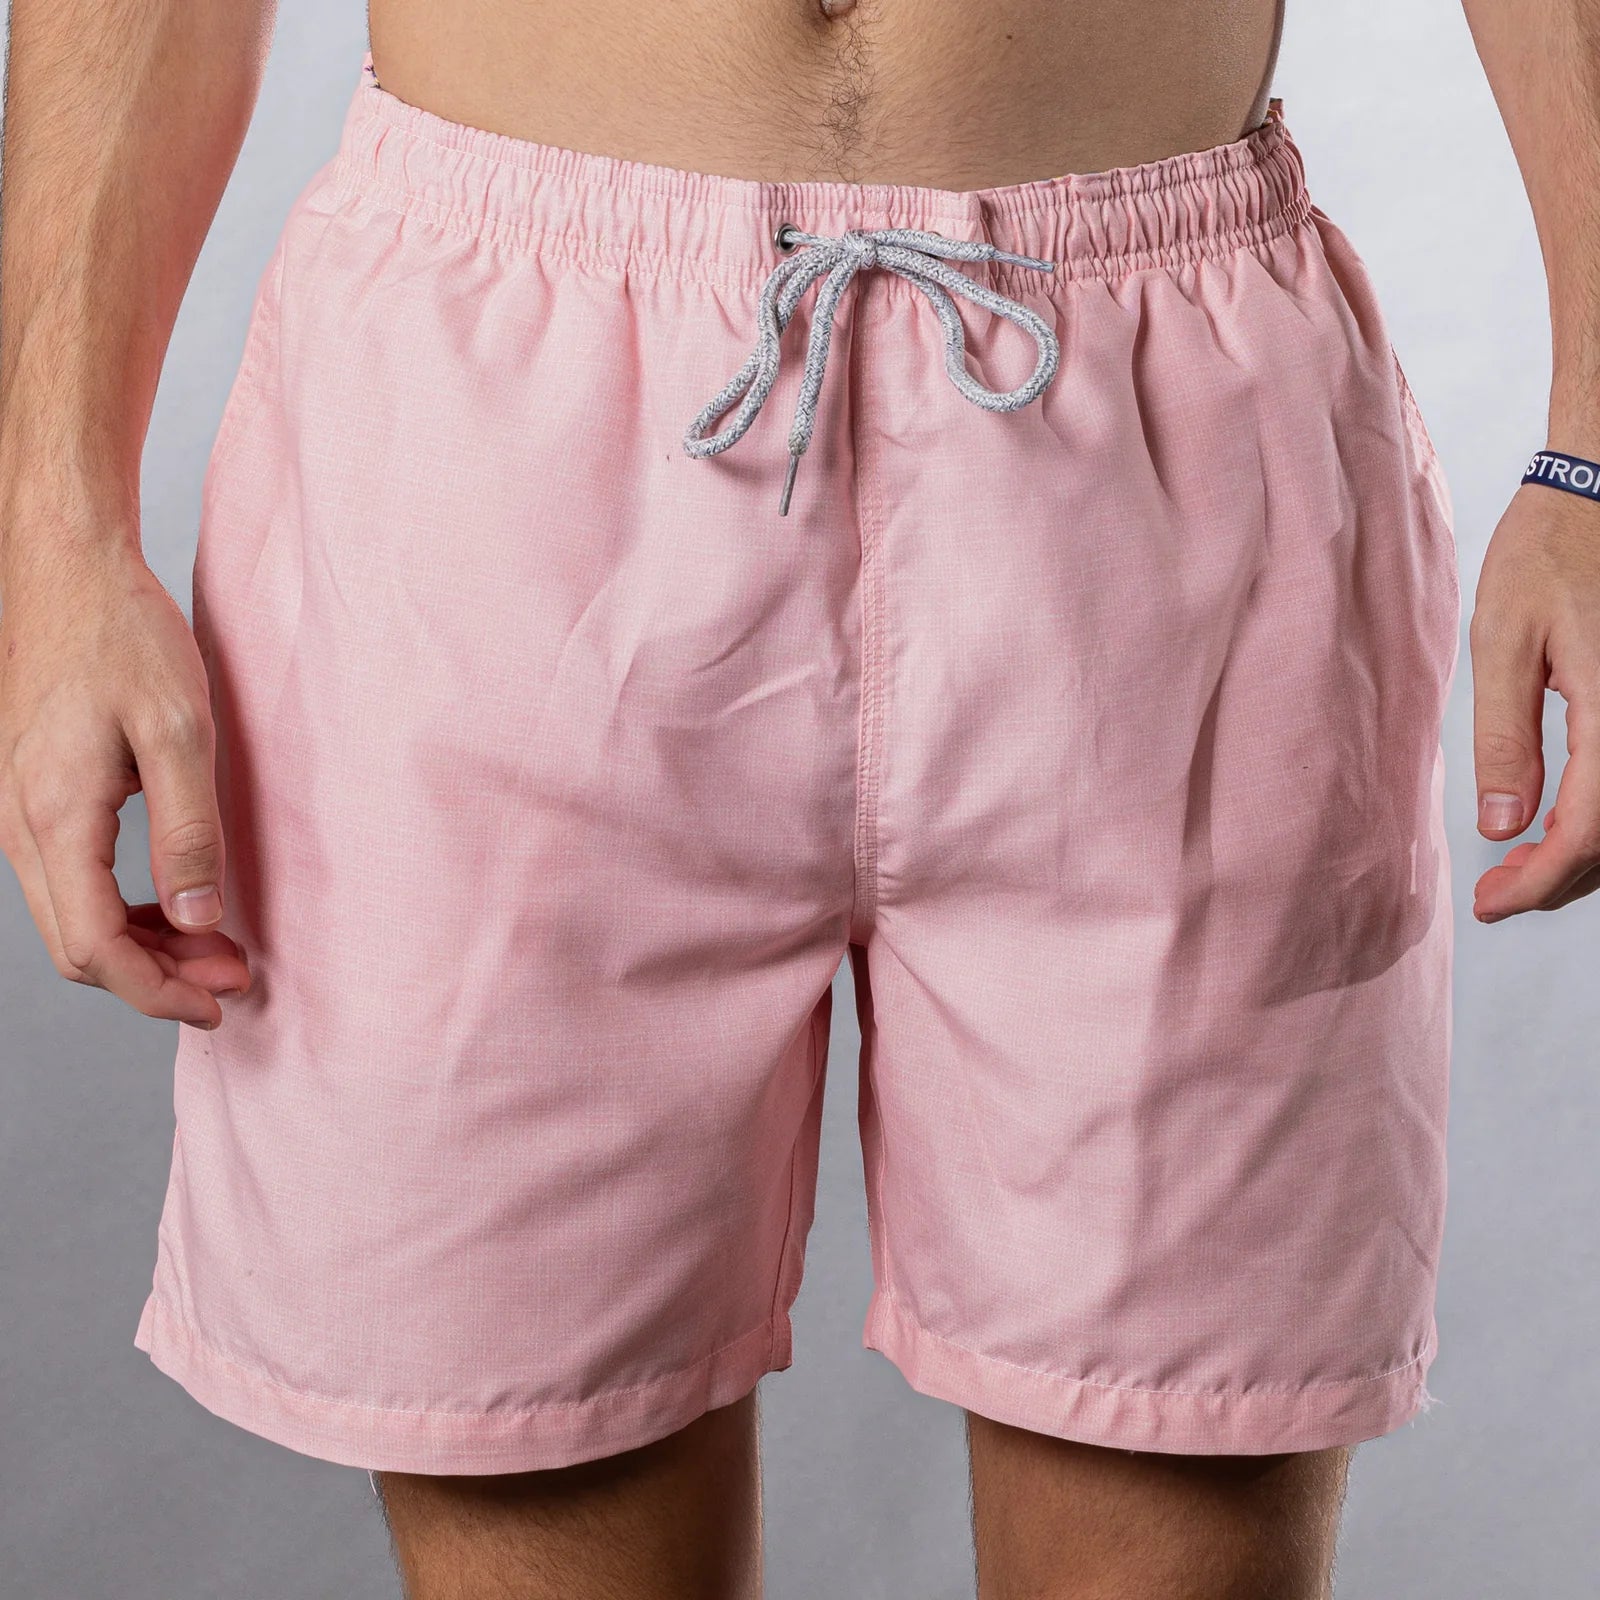 Michael's Swimwear Solid Pink Linen